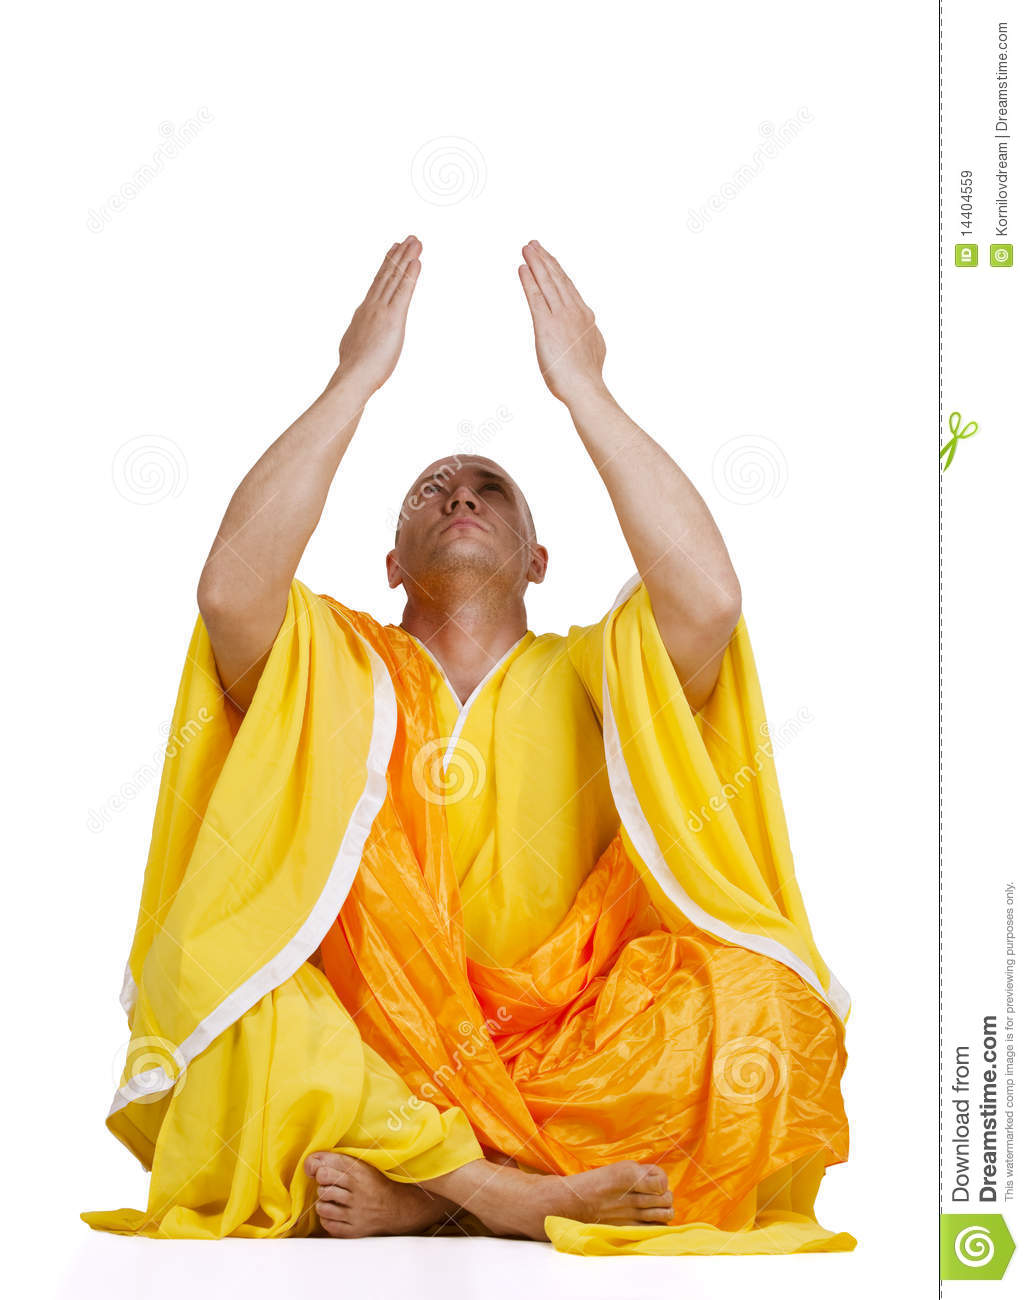 Praying Buddhist Monks Royalty Free Stock Images   Image  14404559